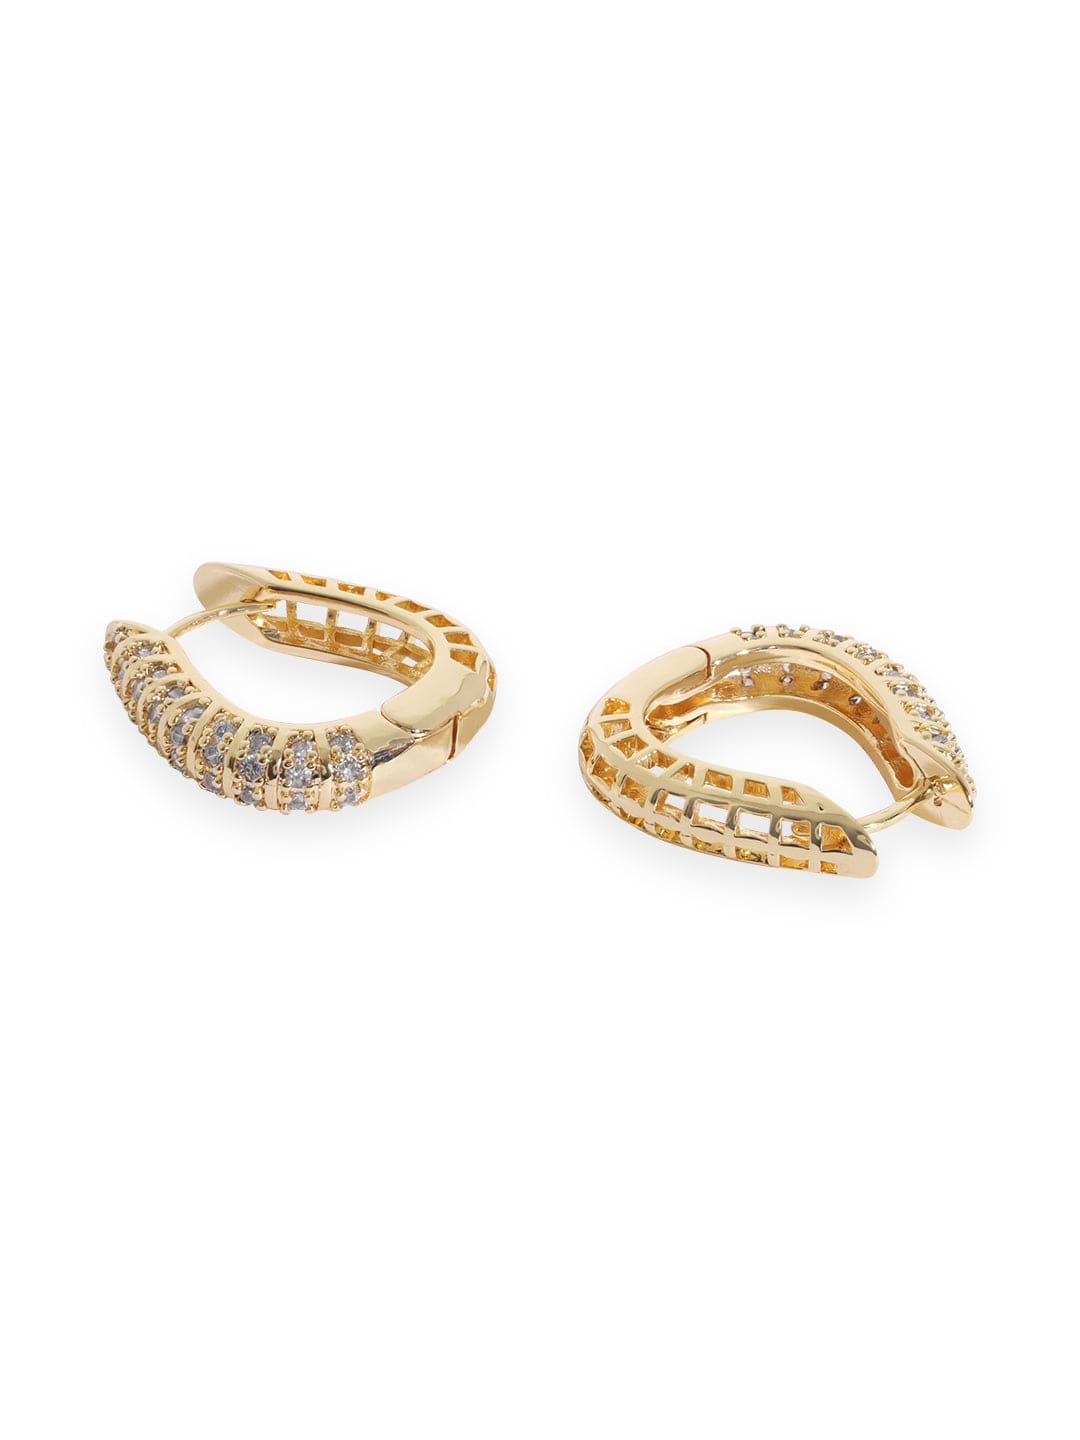 Rubans Voguish Gold-Toned Geometric Hoop Earrings Earrings